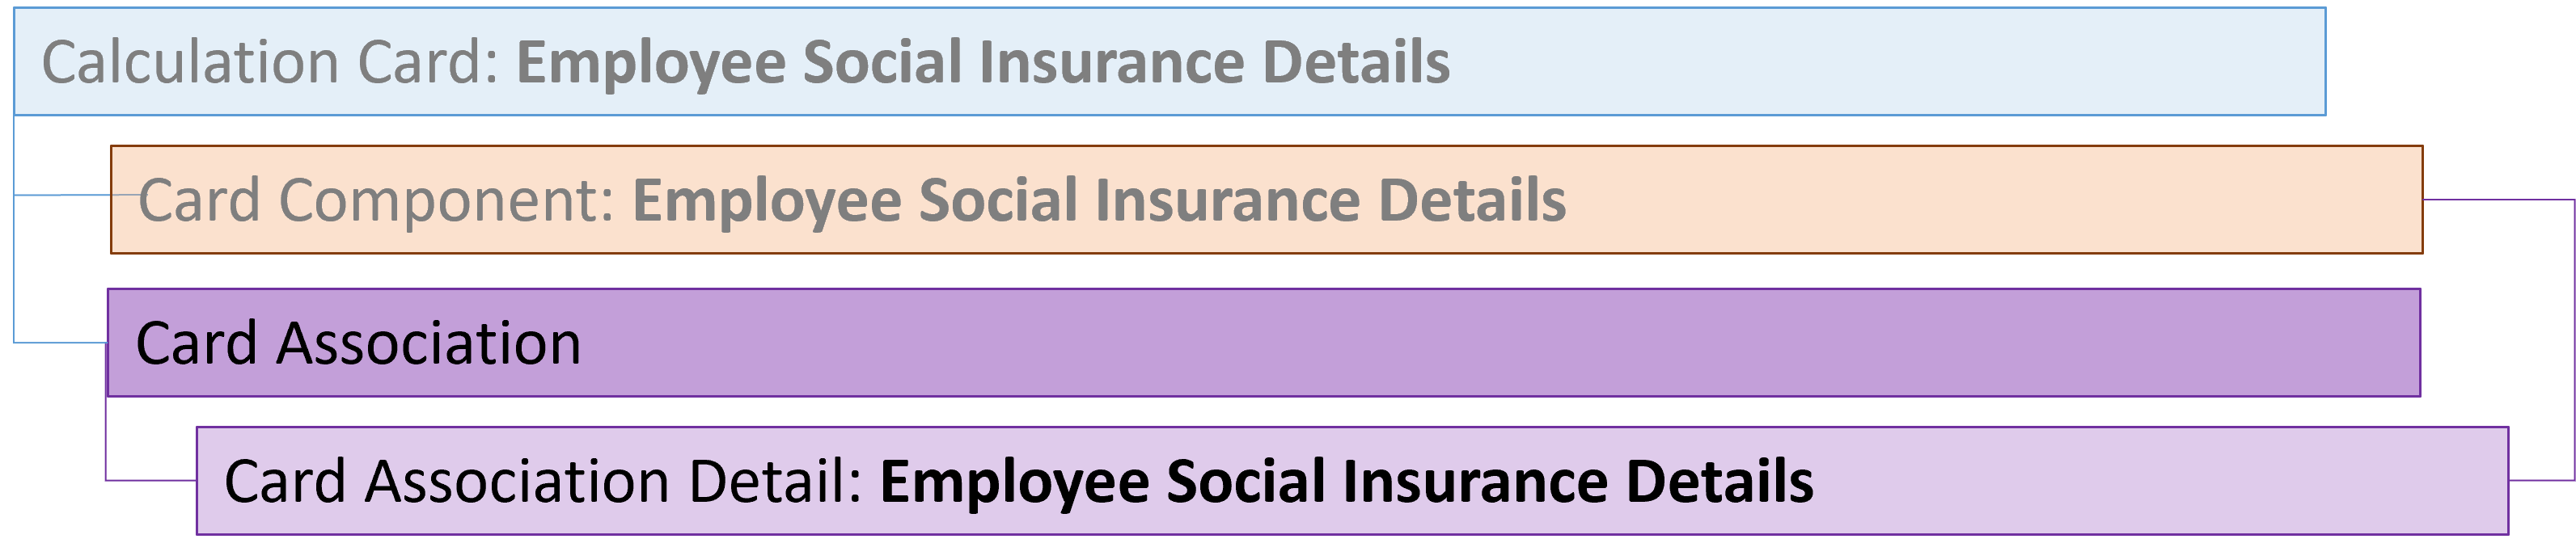 kw employee social insurance details card association